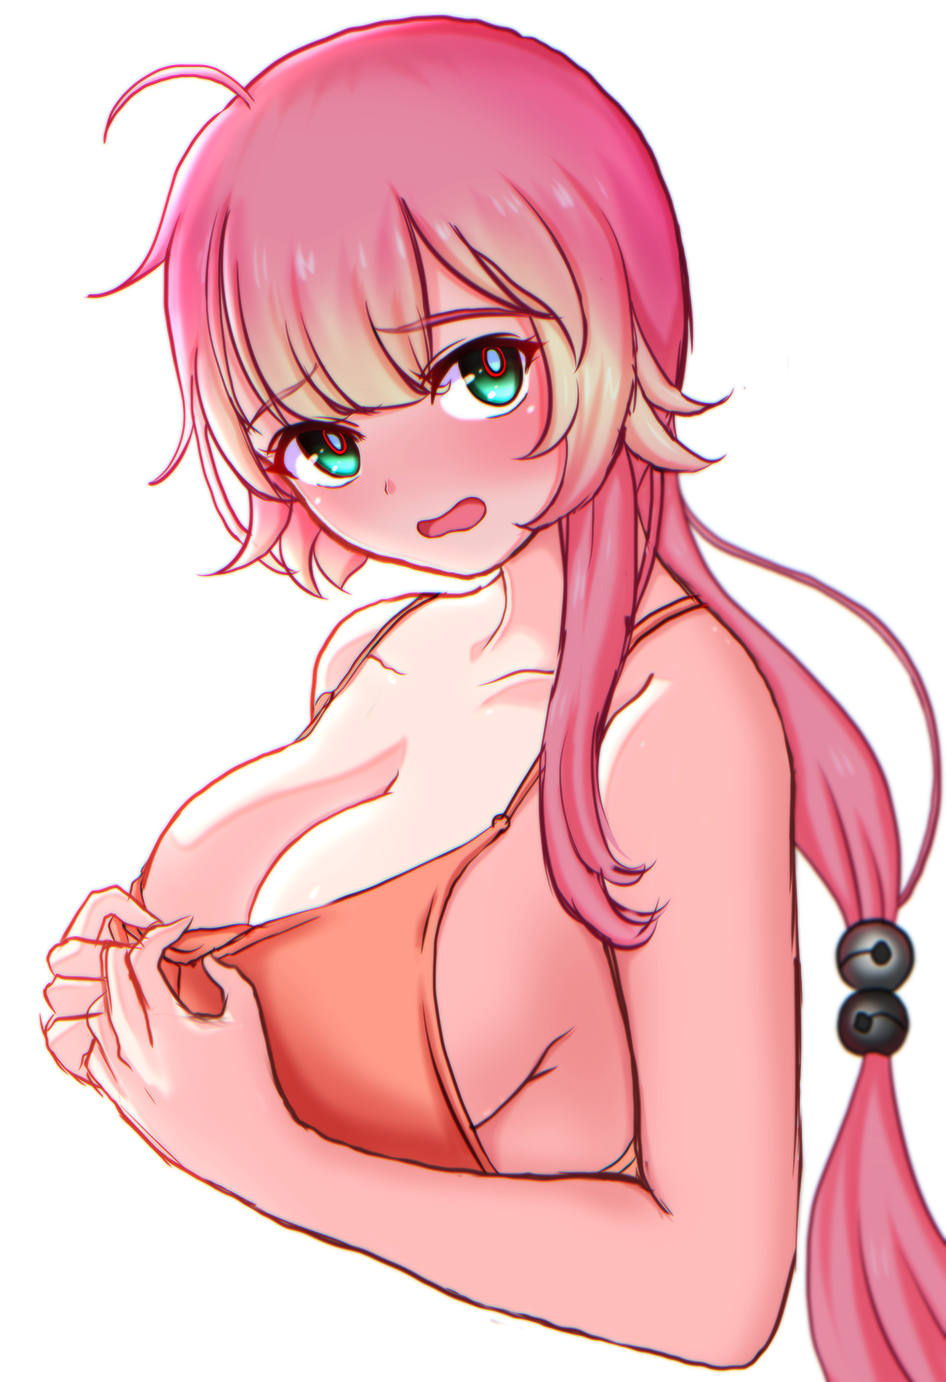 Anime 946x1382 Chii Aruel Soulworker big boobs cleavage green eyes pink hair ponytail blushing anime girls